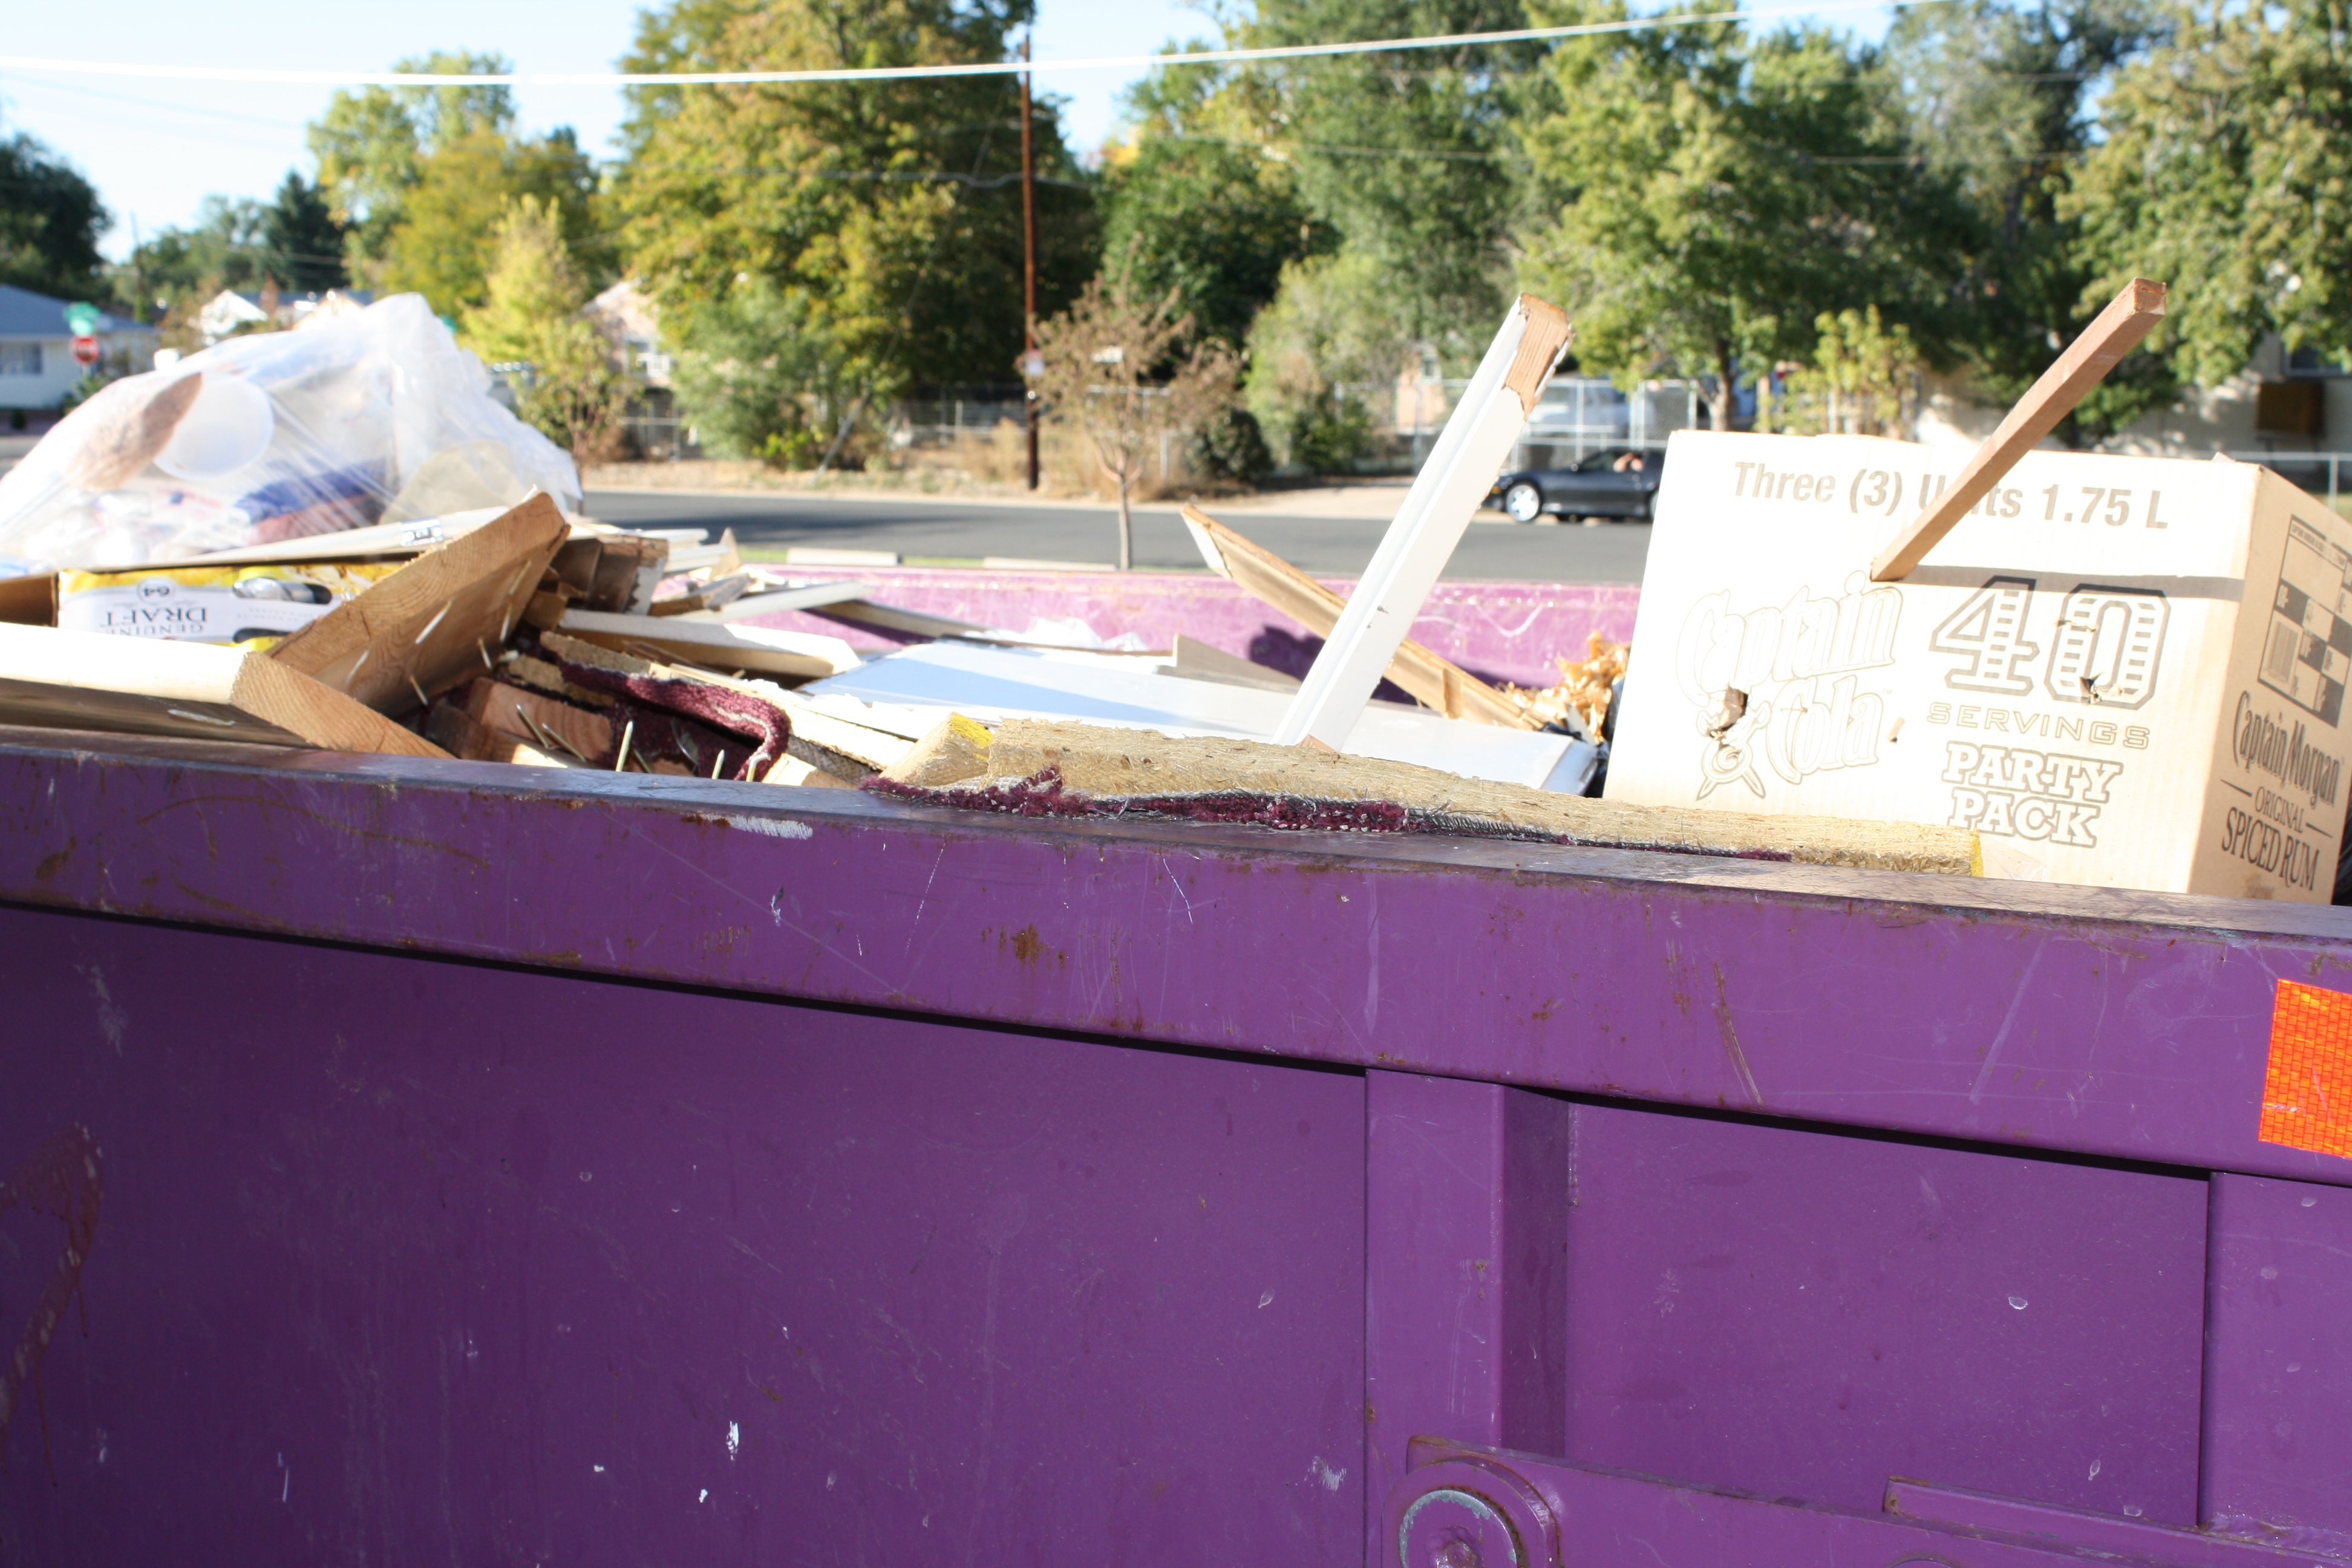 Full Trash Dumpster Picture | Free Photograph | Photos Public Domain